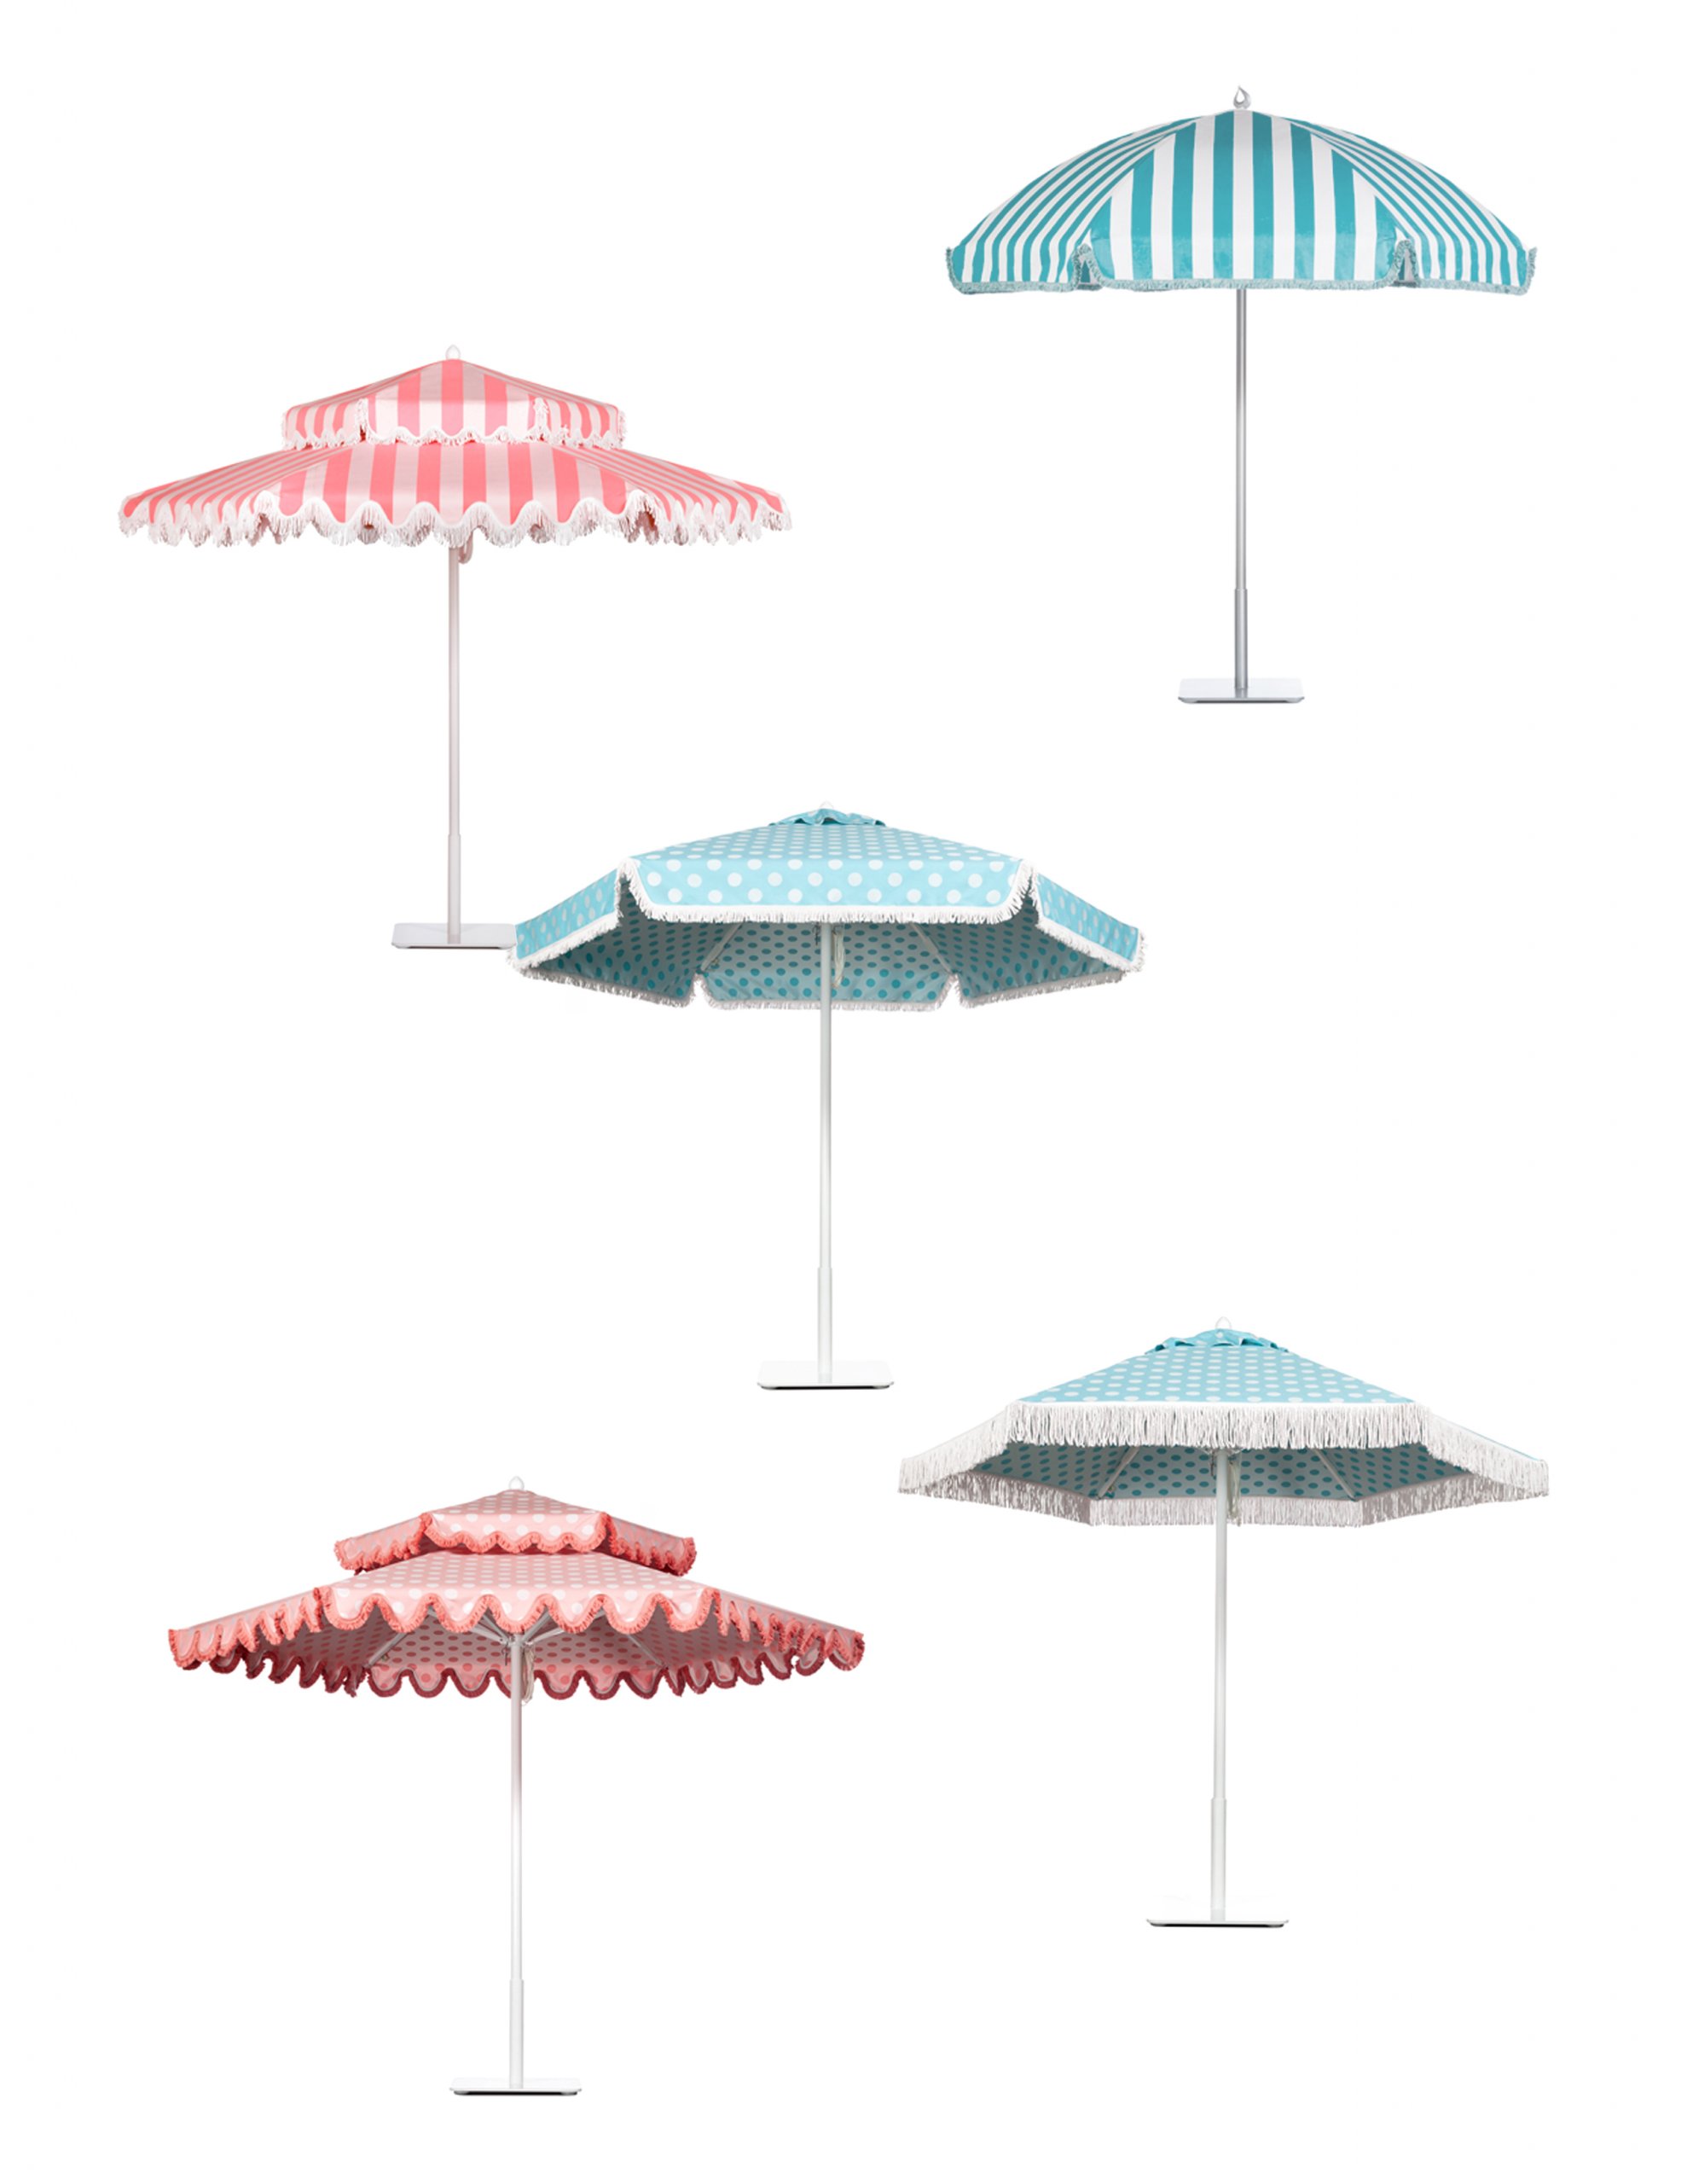 Studio shots of umbrellas